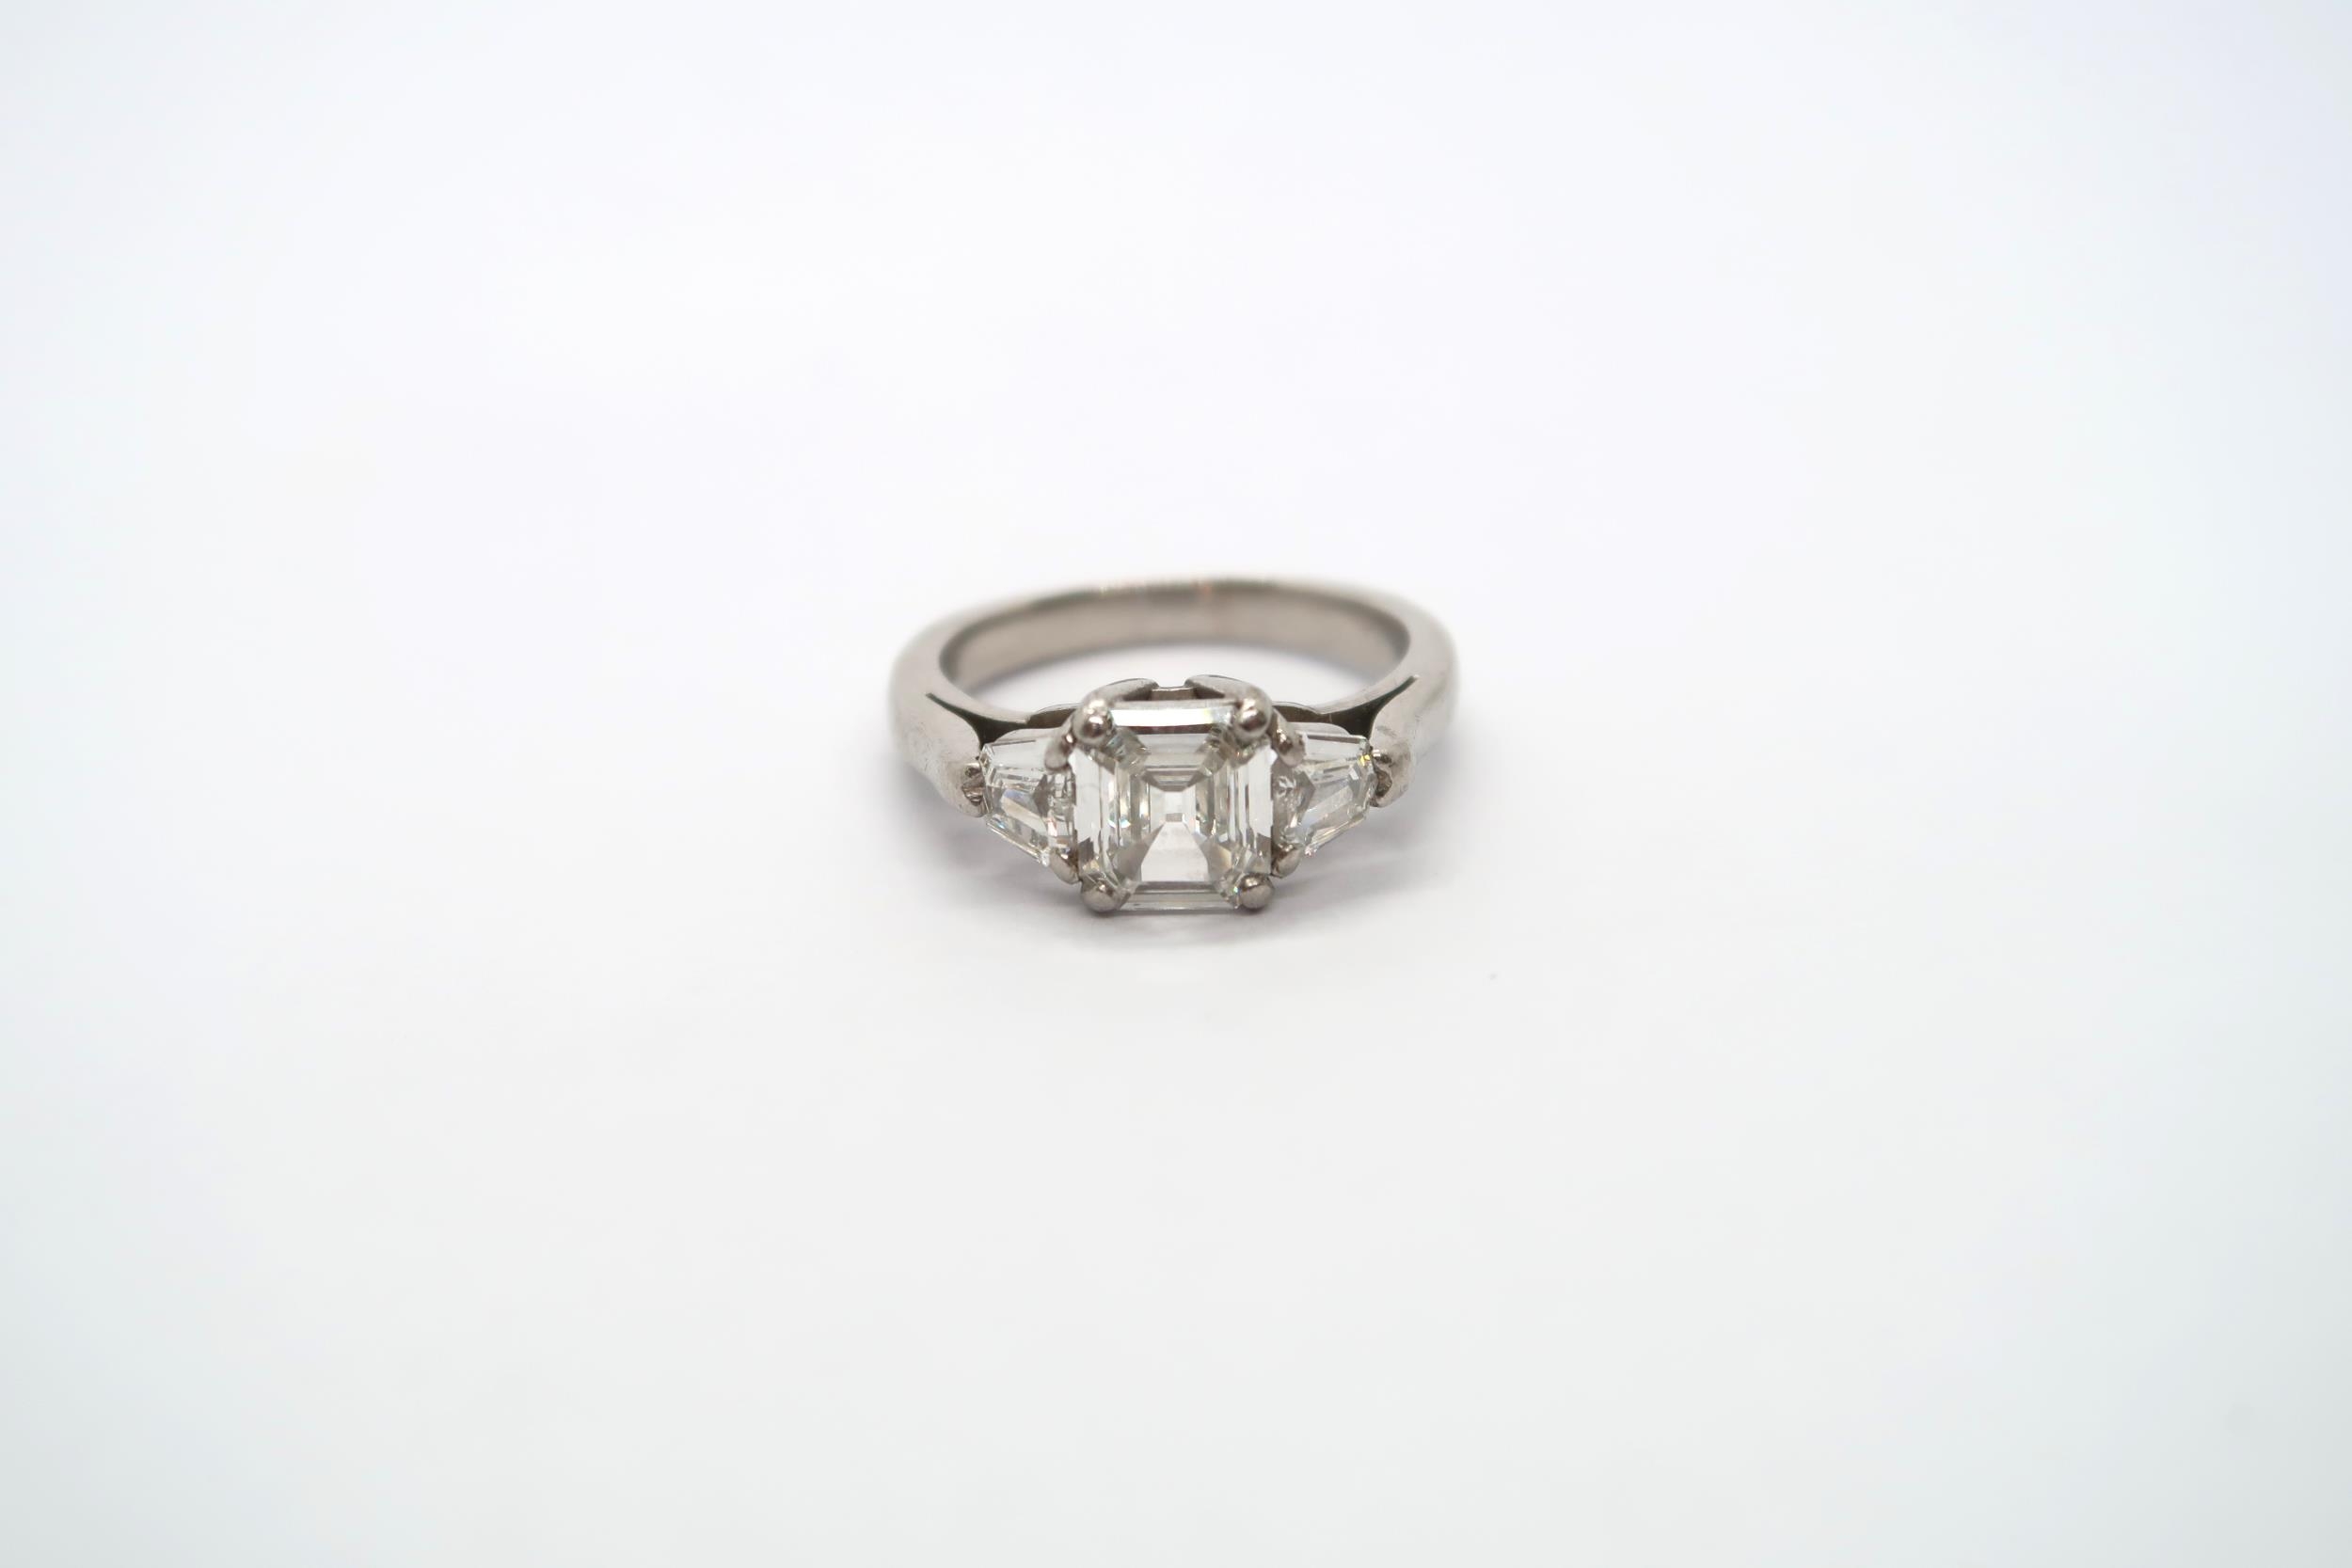 A very good platinum three stone diamond ring - The square emerald cut diamond estimated 1.1ct - Image 7 of 11